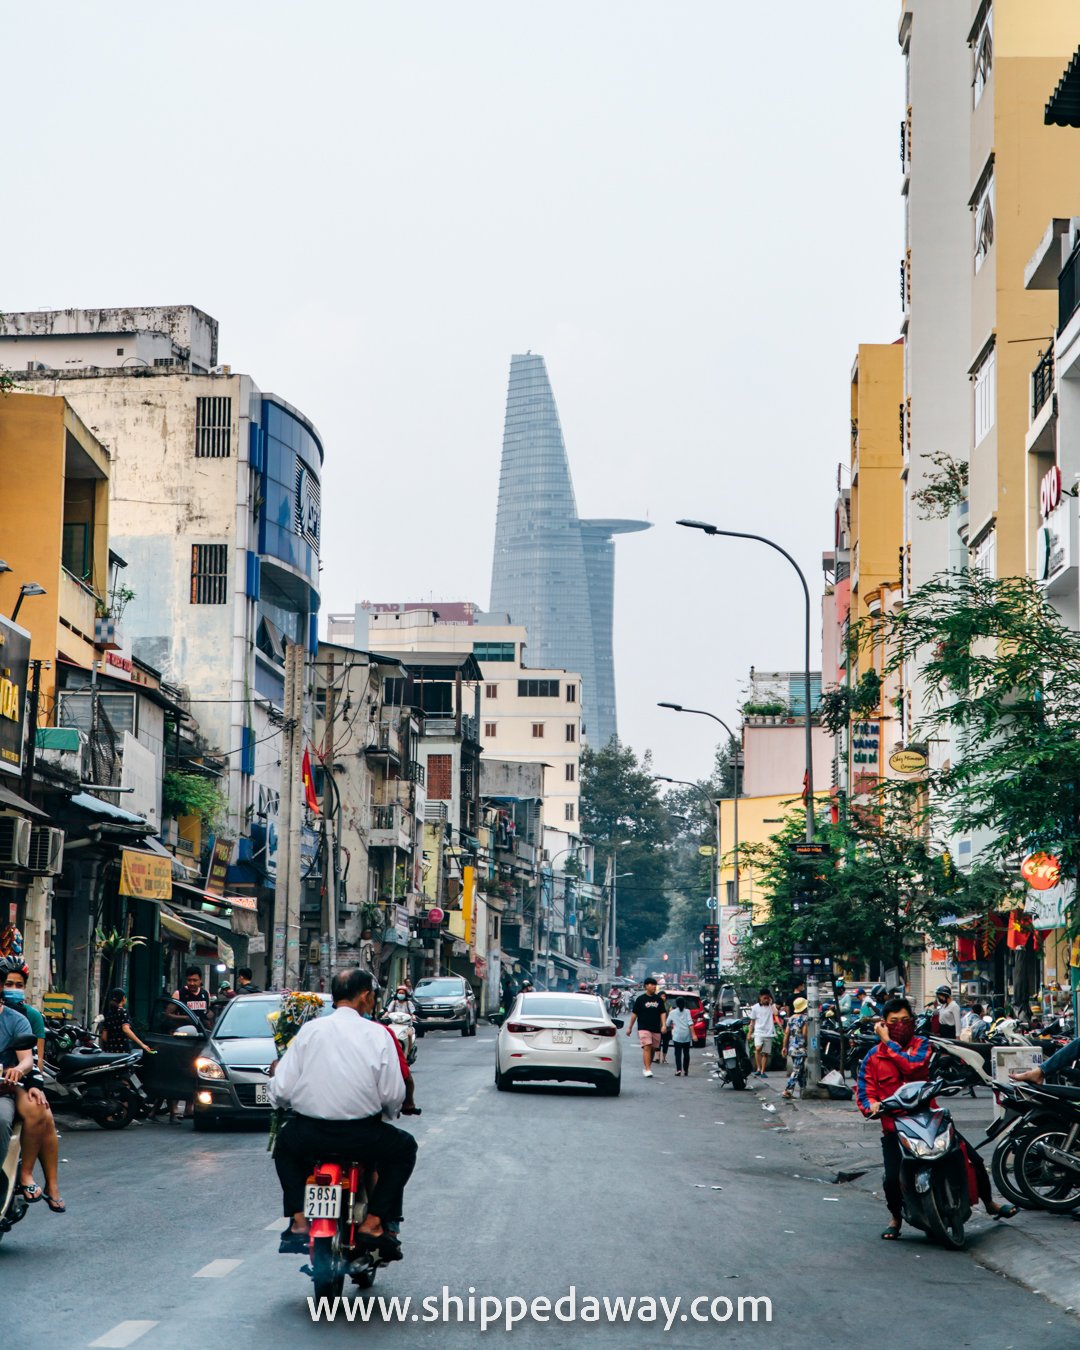 Saigon Skydeck seen on Ho Chi Minh City's streets, Vietnam